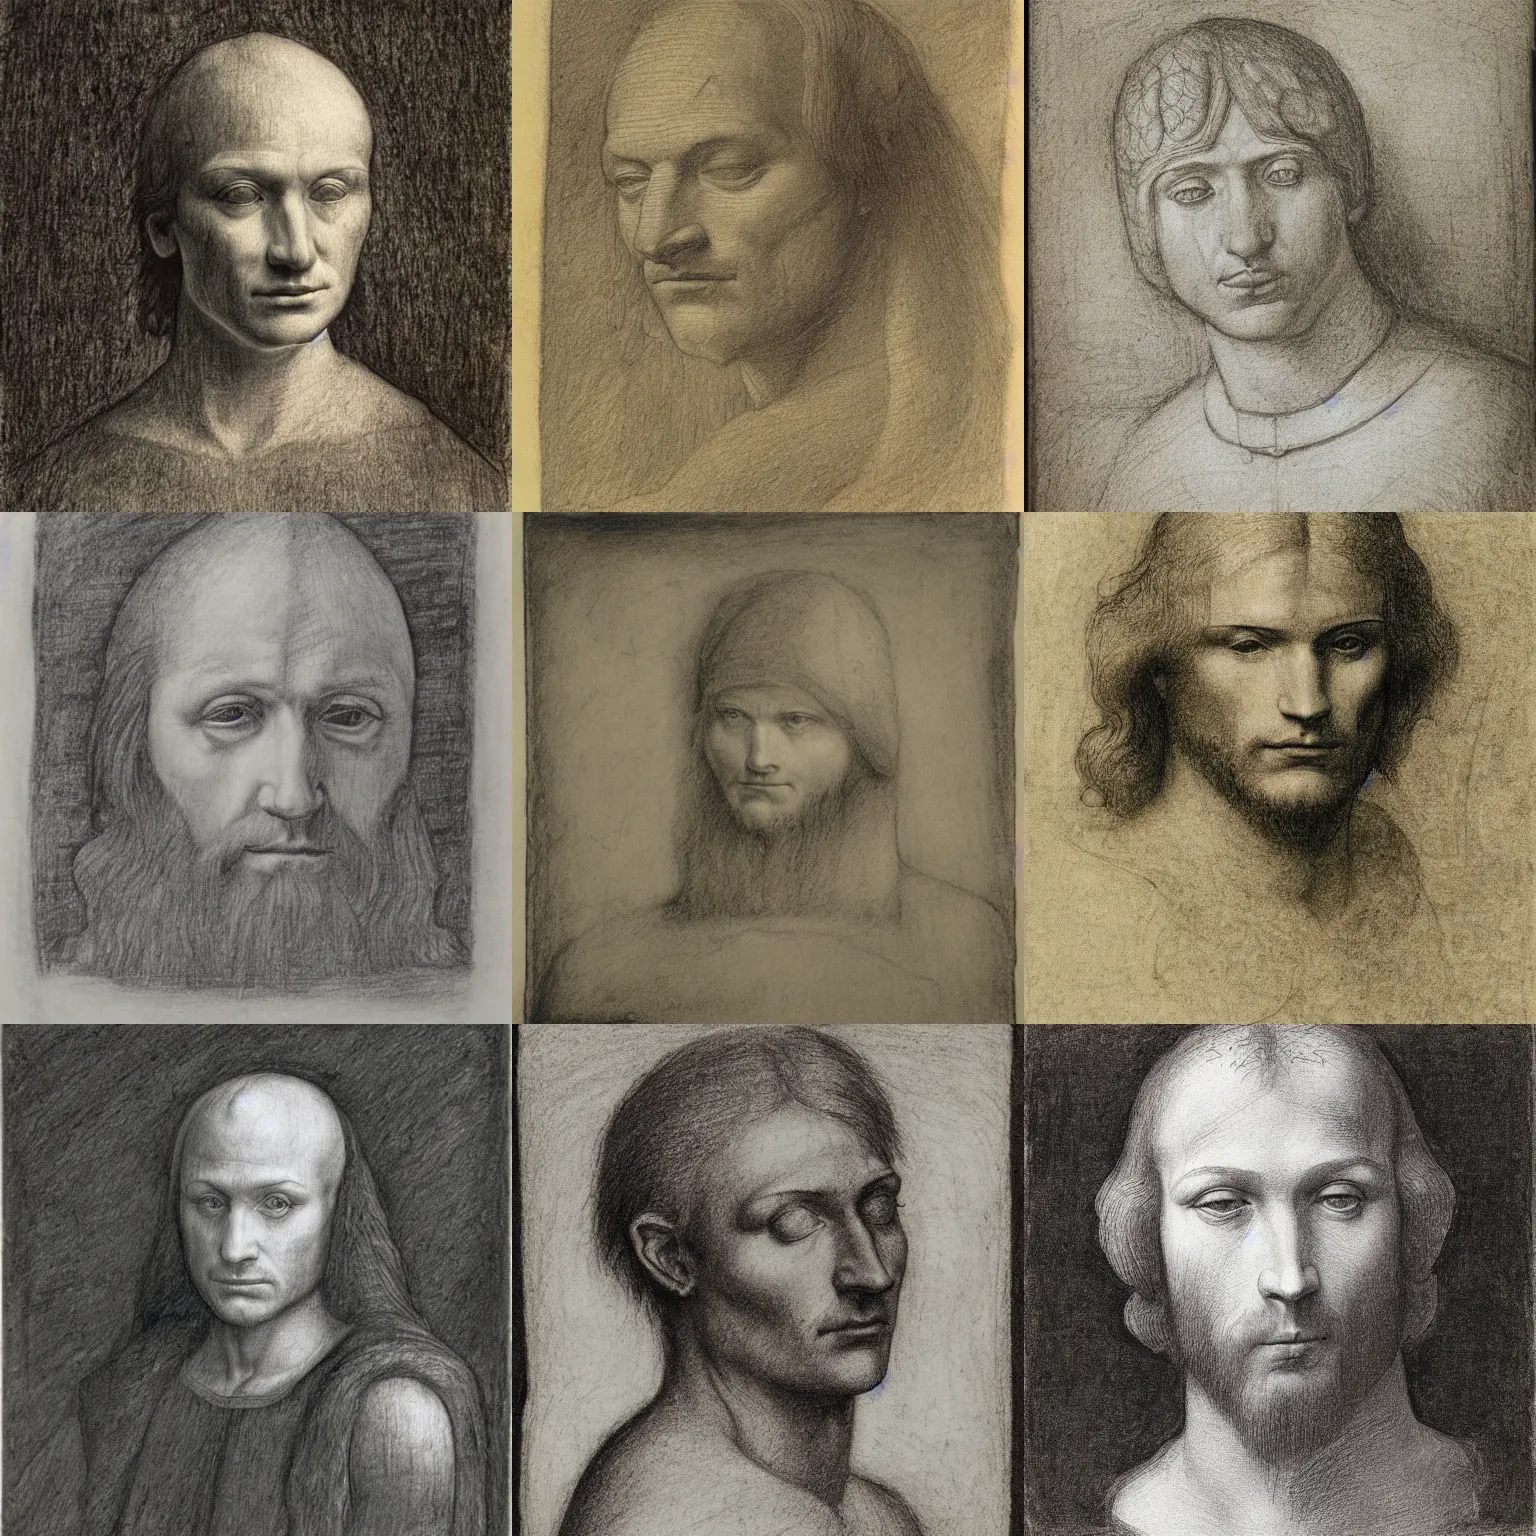 Prompt: portrait of Jonas gahr støre, drawn by Leonardo da Vinci, pencil on paper